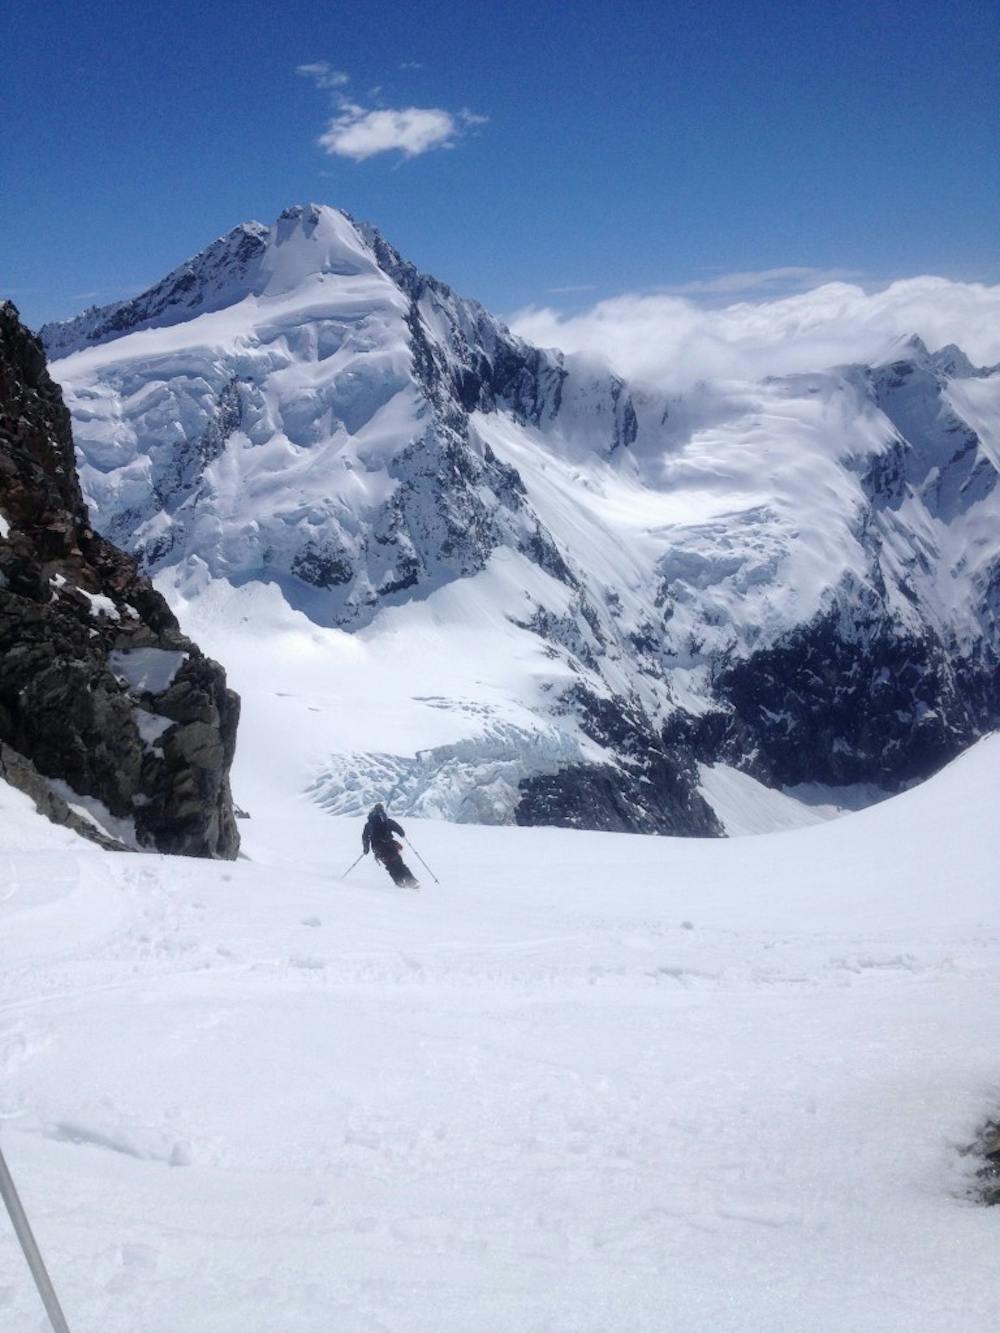 Skiing down the Joie de Vivre Glacier